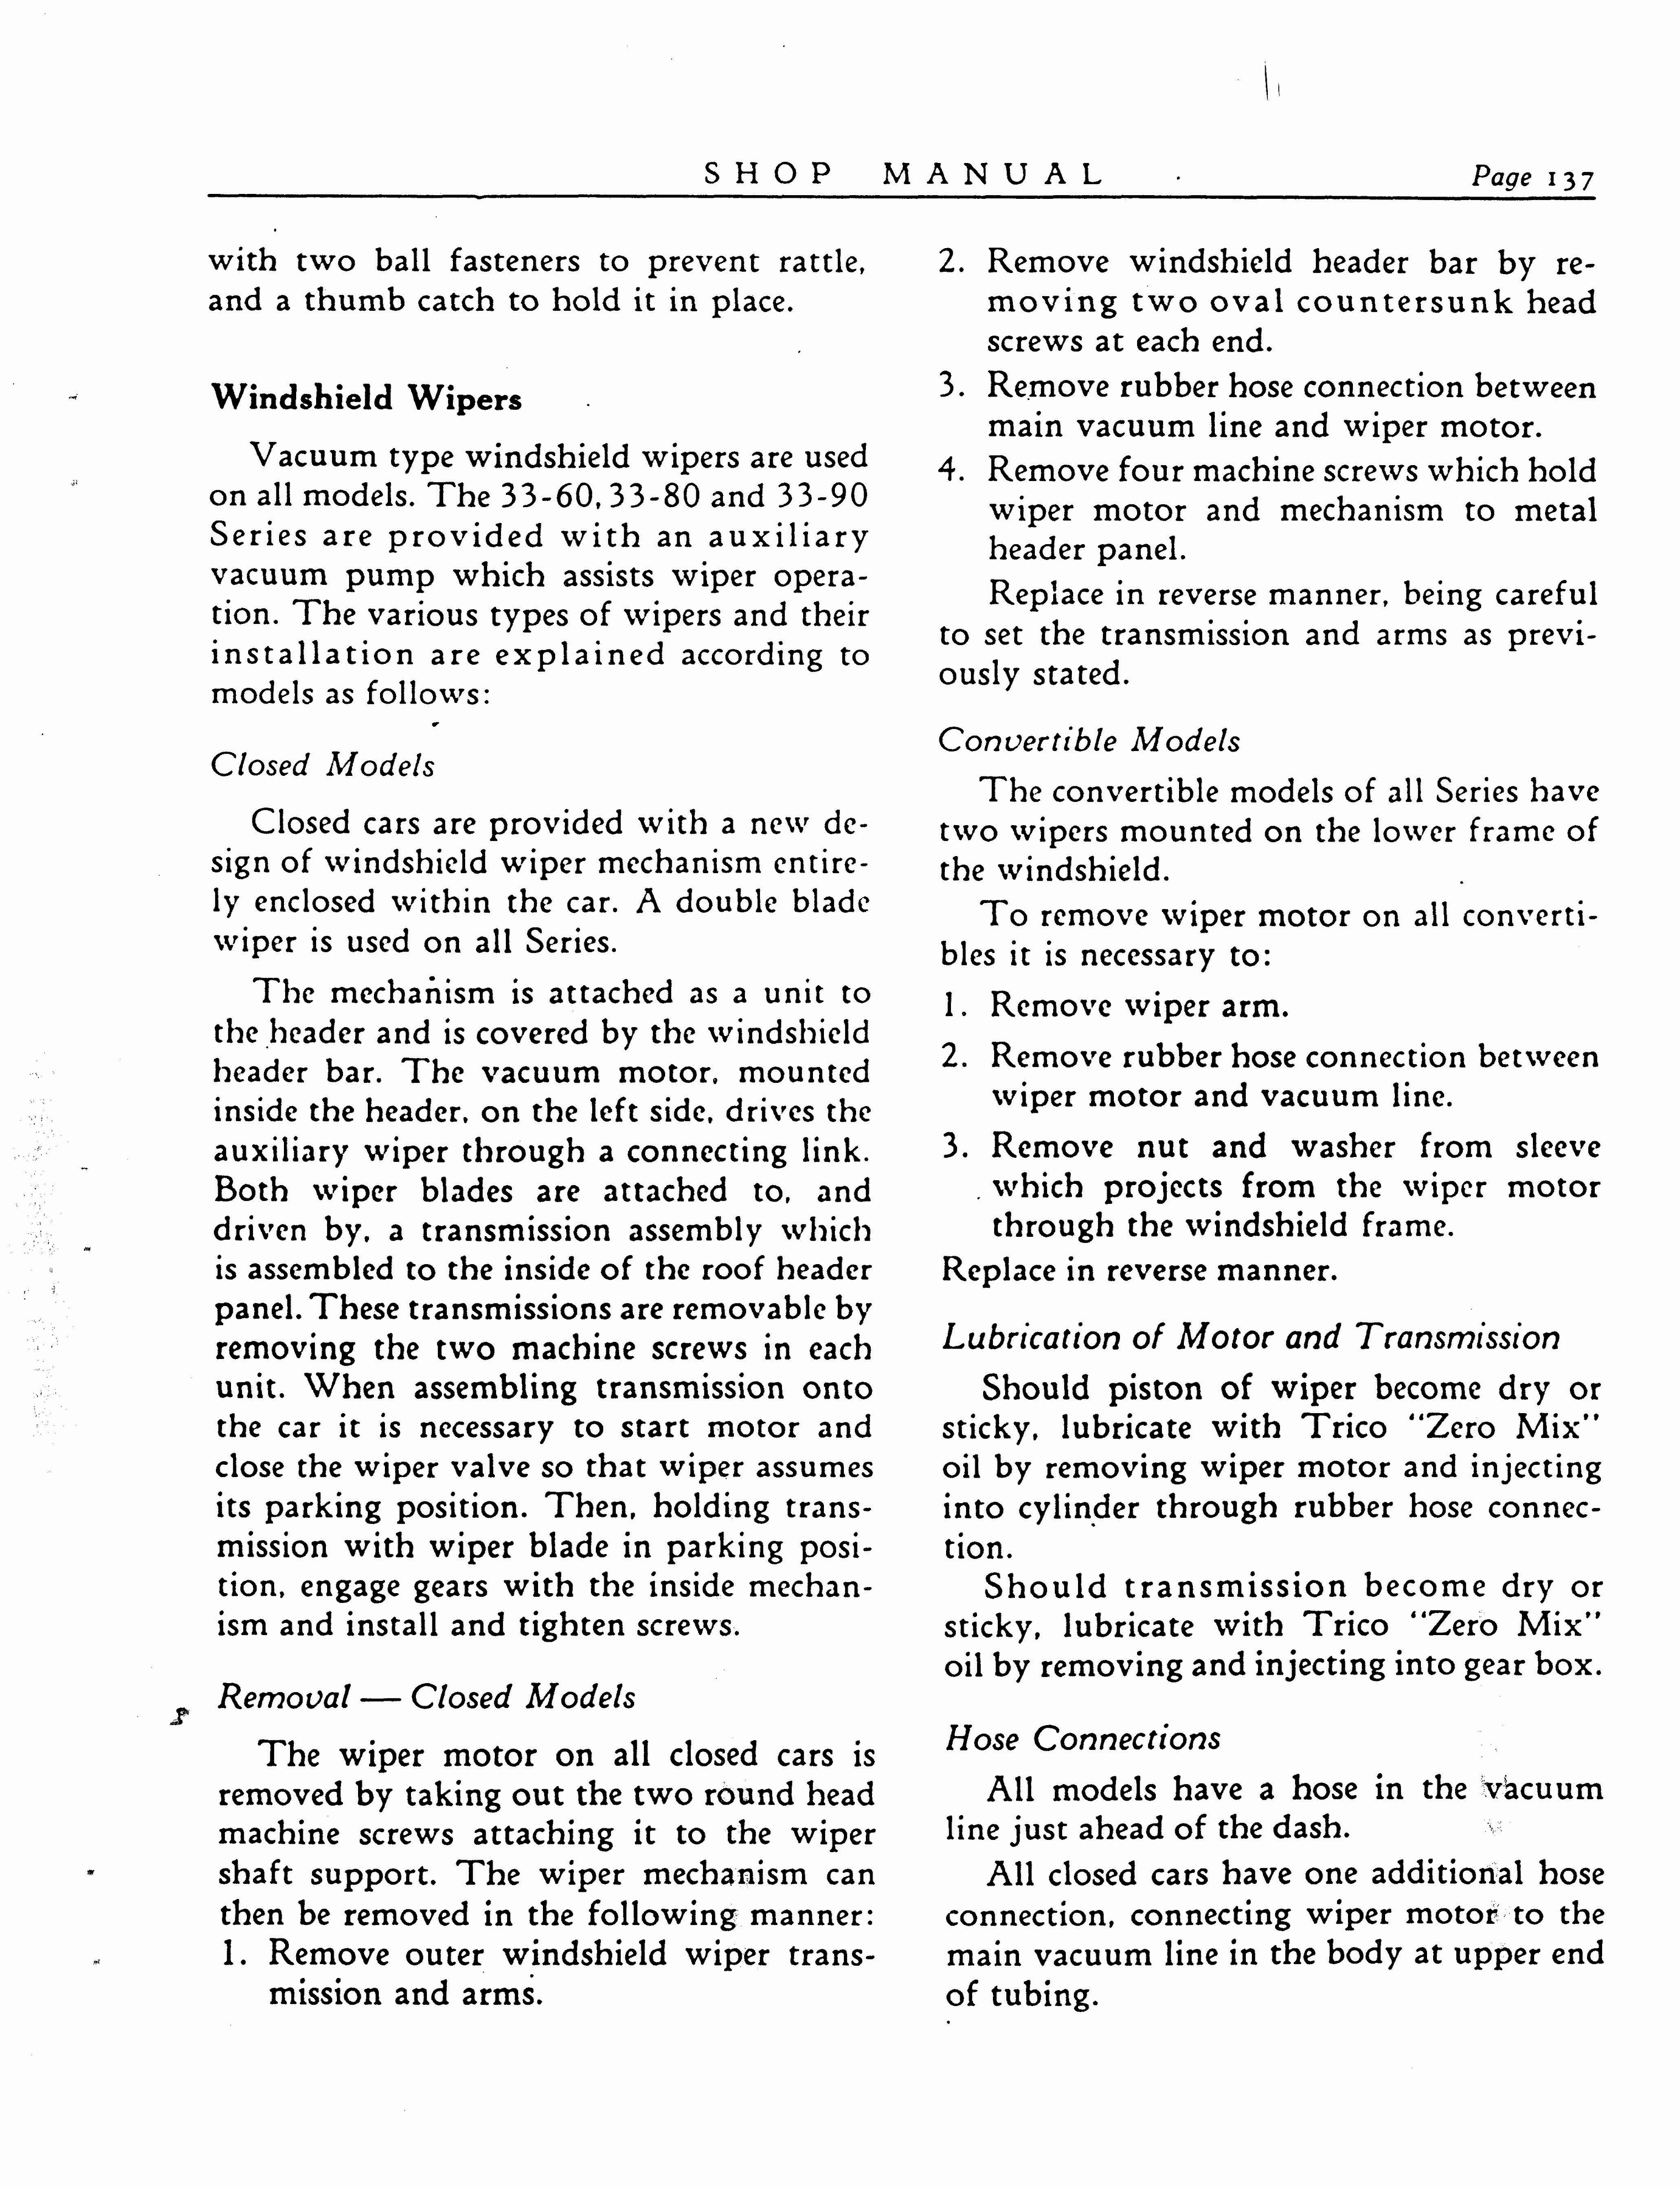 n_1933 Buick Shop Manual_Page_138.jpg